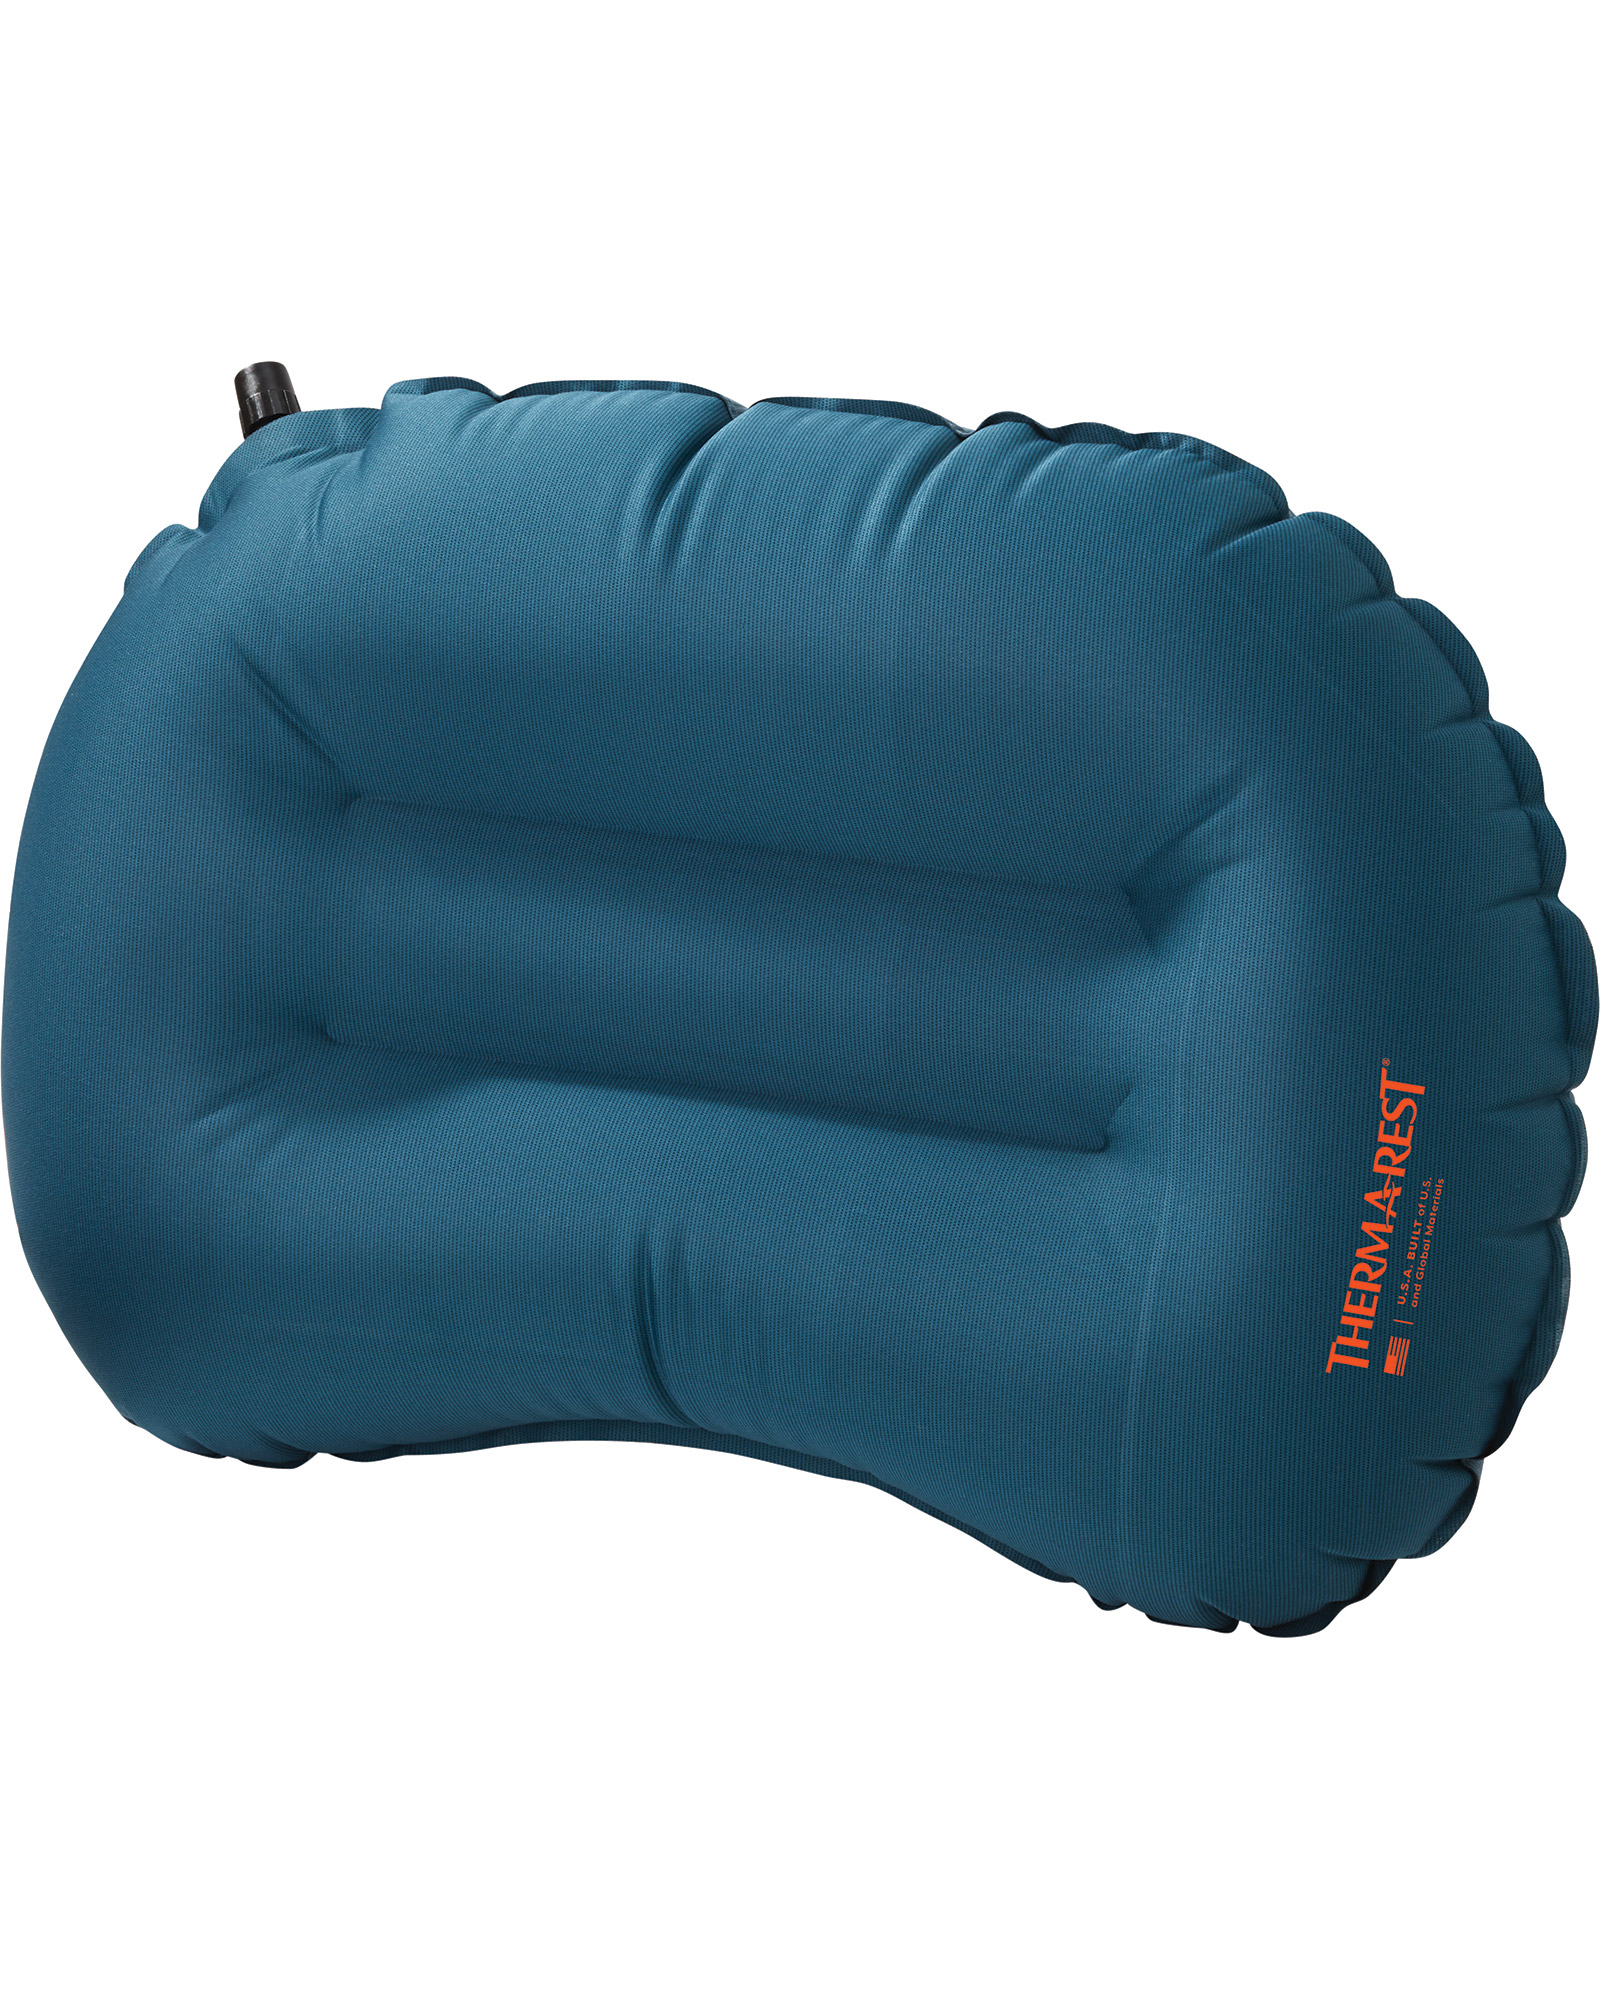 Therm-a-rest Air Head Lite Pillow